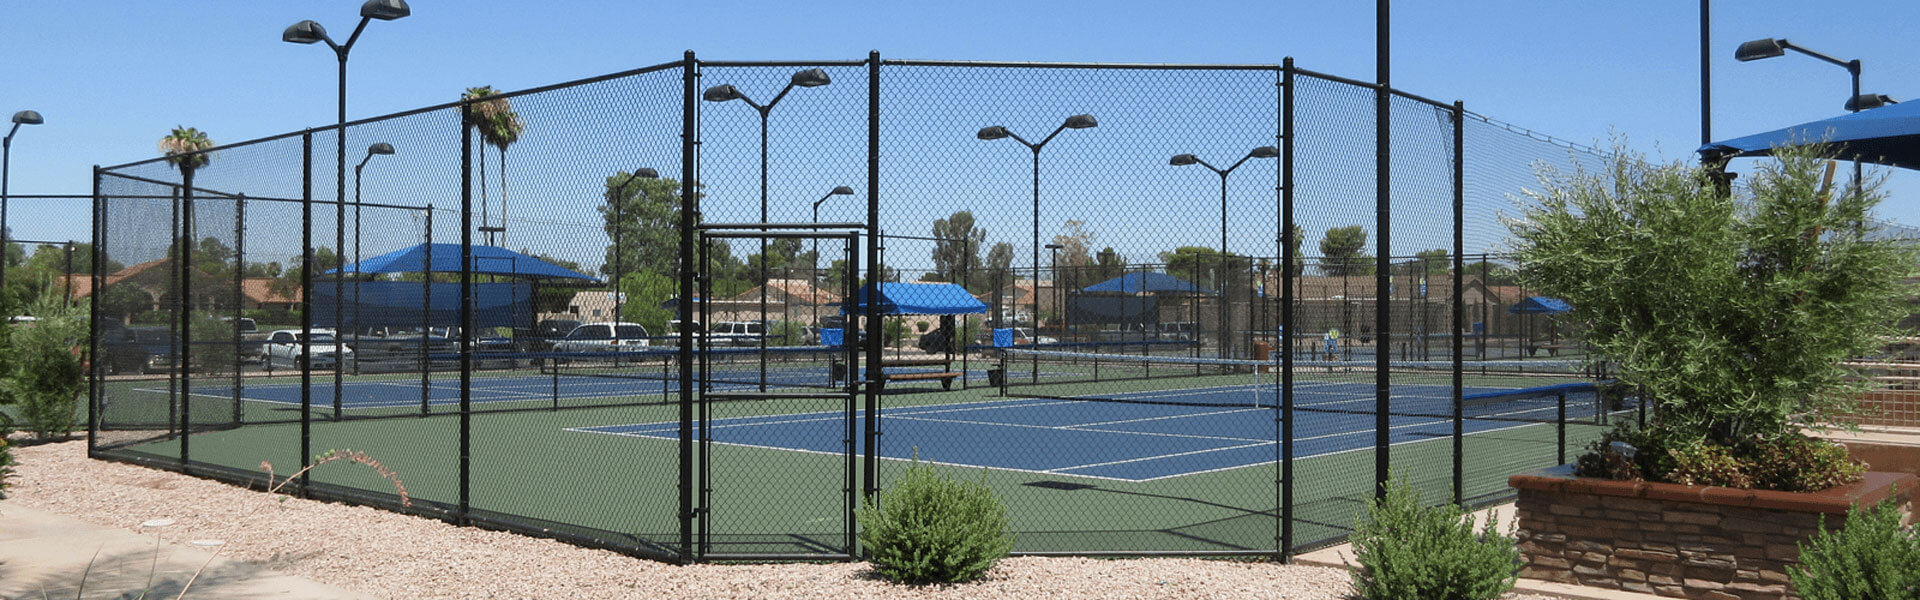 tennis-court-fence